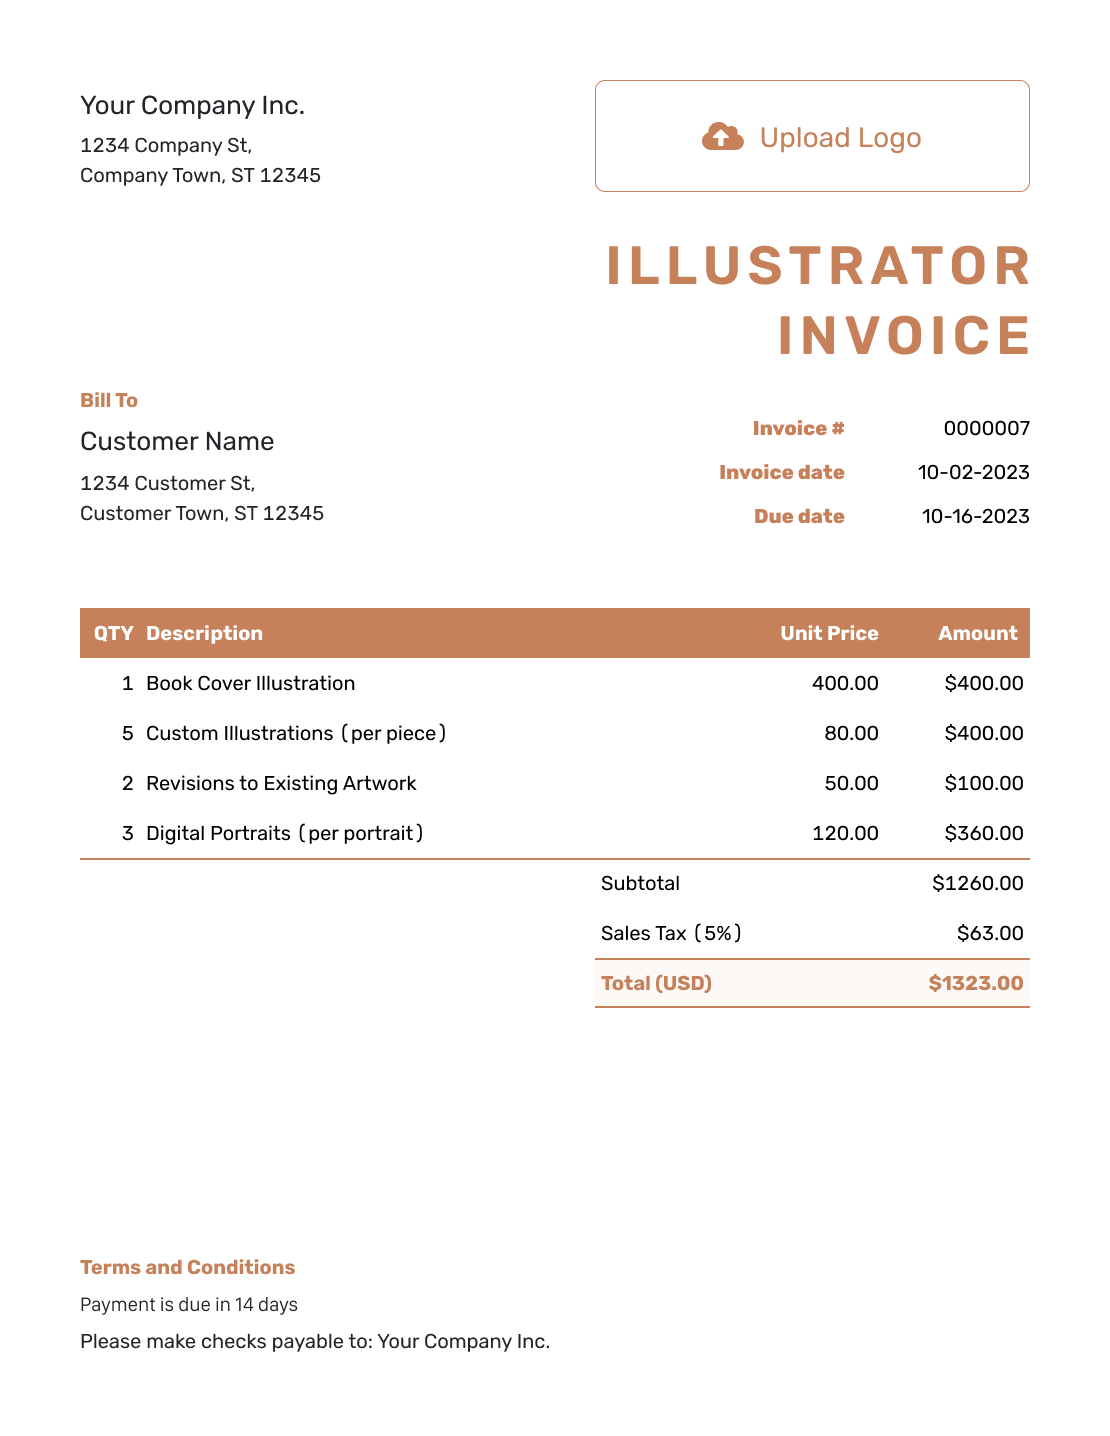 Standard Illustrator Invoice Template